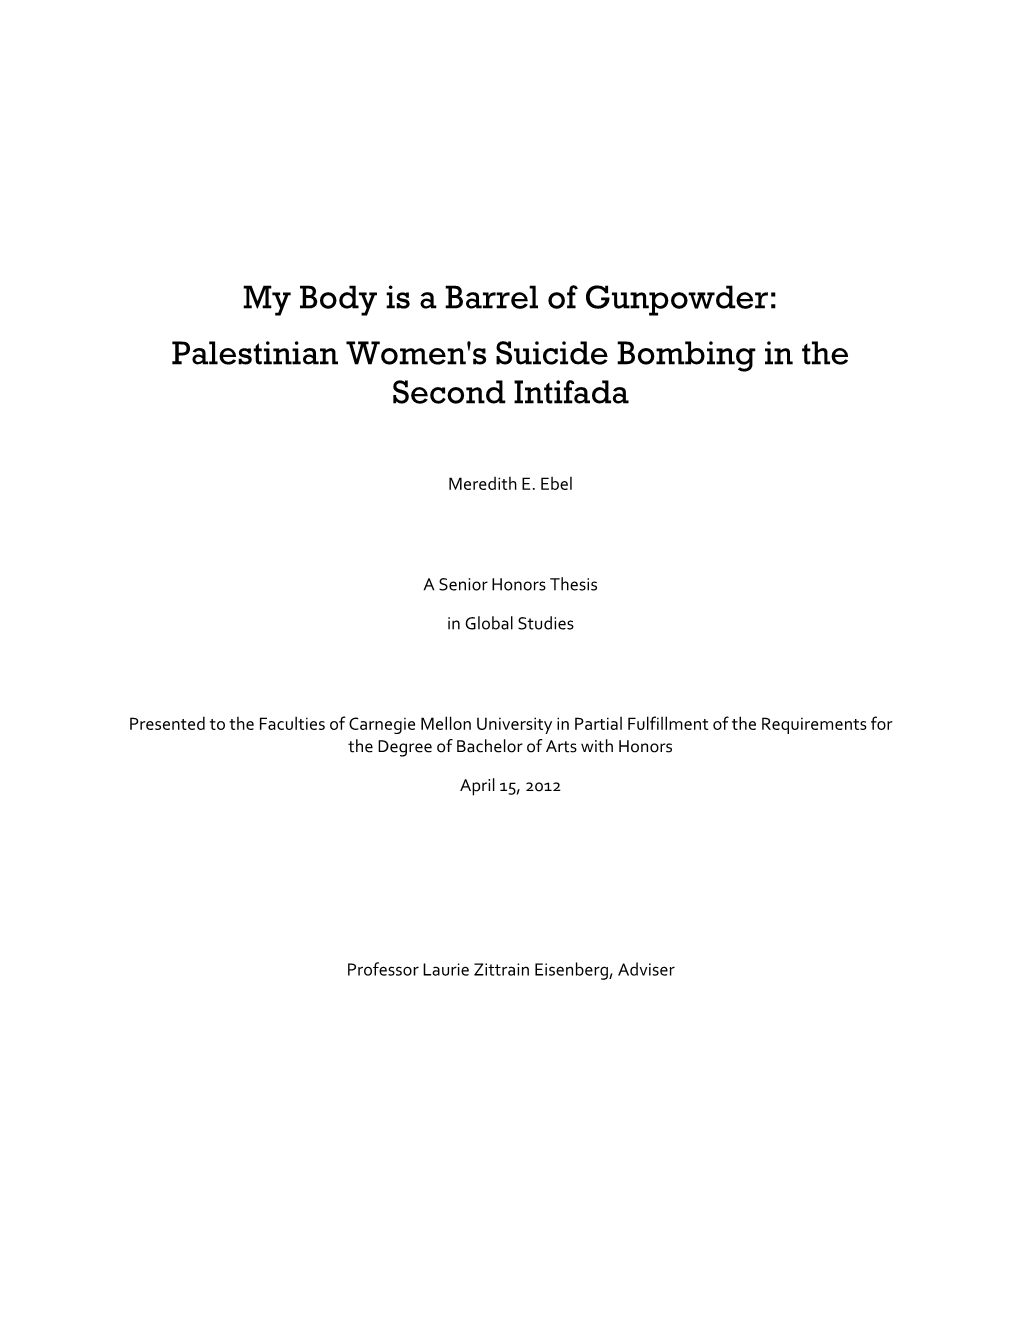 My Body Is a Barrel of Gunpowder: Palestinian Women's Suicide Bombing in the Second Intifada